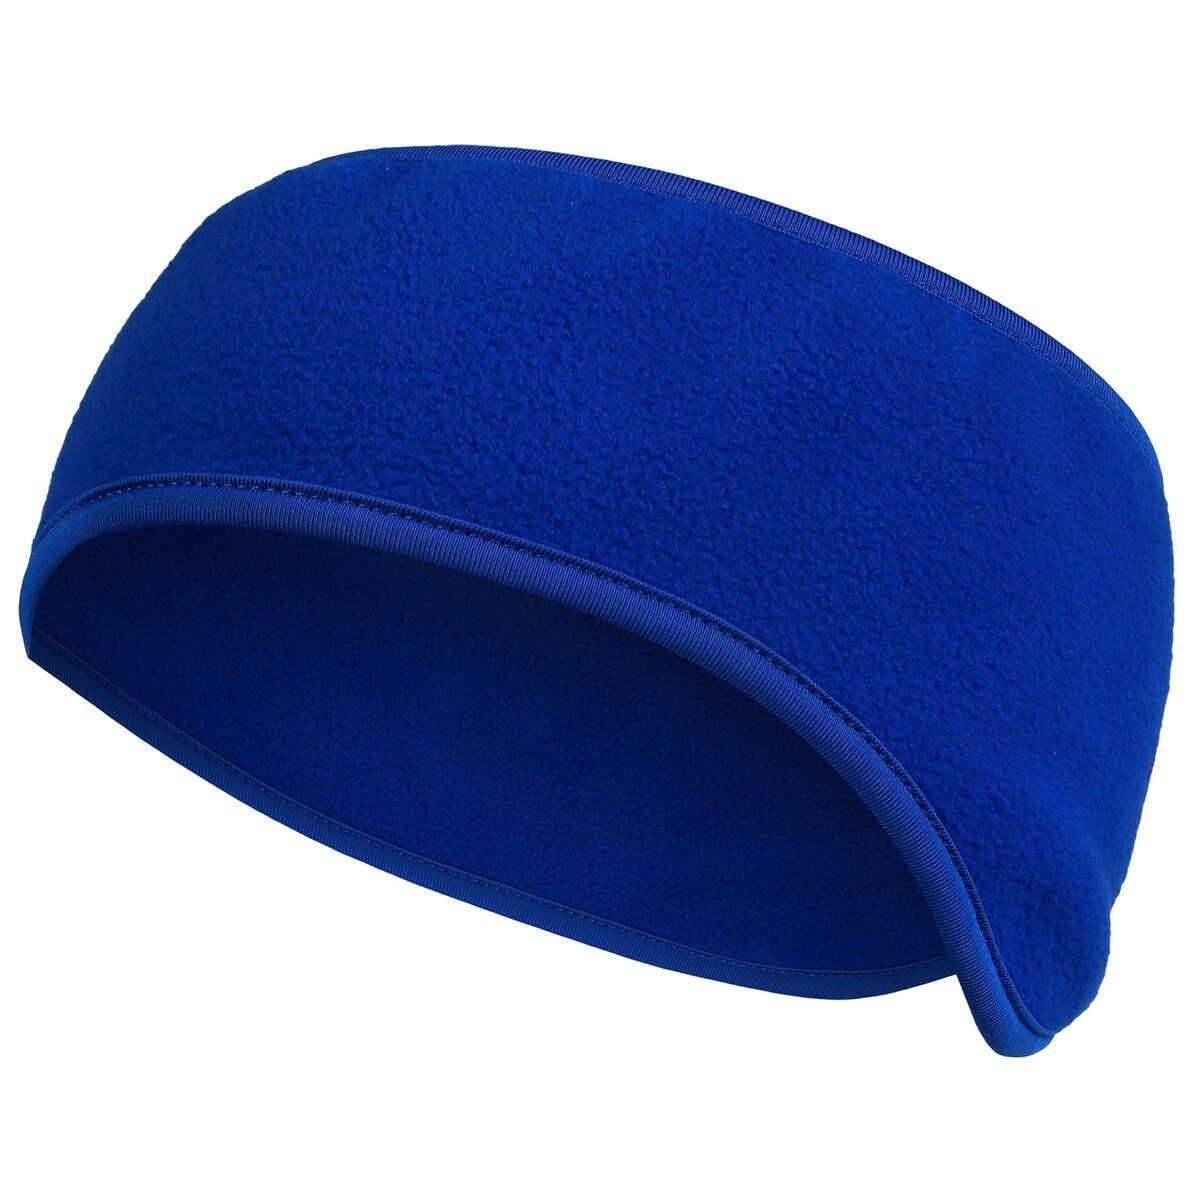 Повязка на голову onlytop, обхват 50-61 см, цвет синий повязка на голову mavic красная 2019 c11201